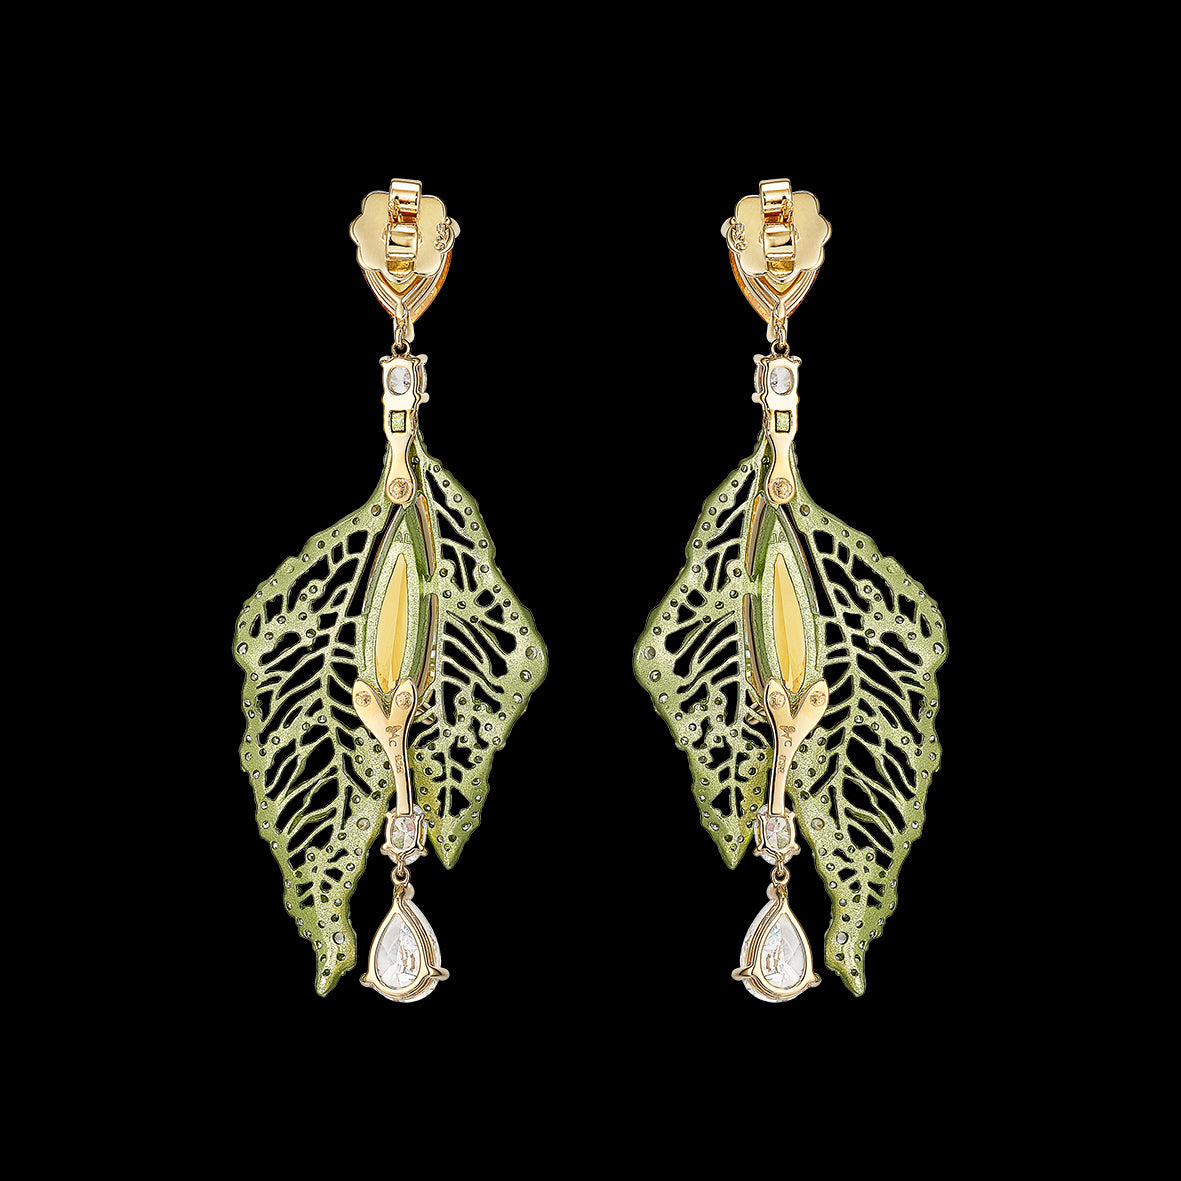 Bridal Long Gold Earrings Designs 2022 | New Model Earrings Design In Gold  | Gold Earrings For Girls - YouTube